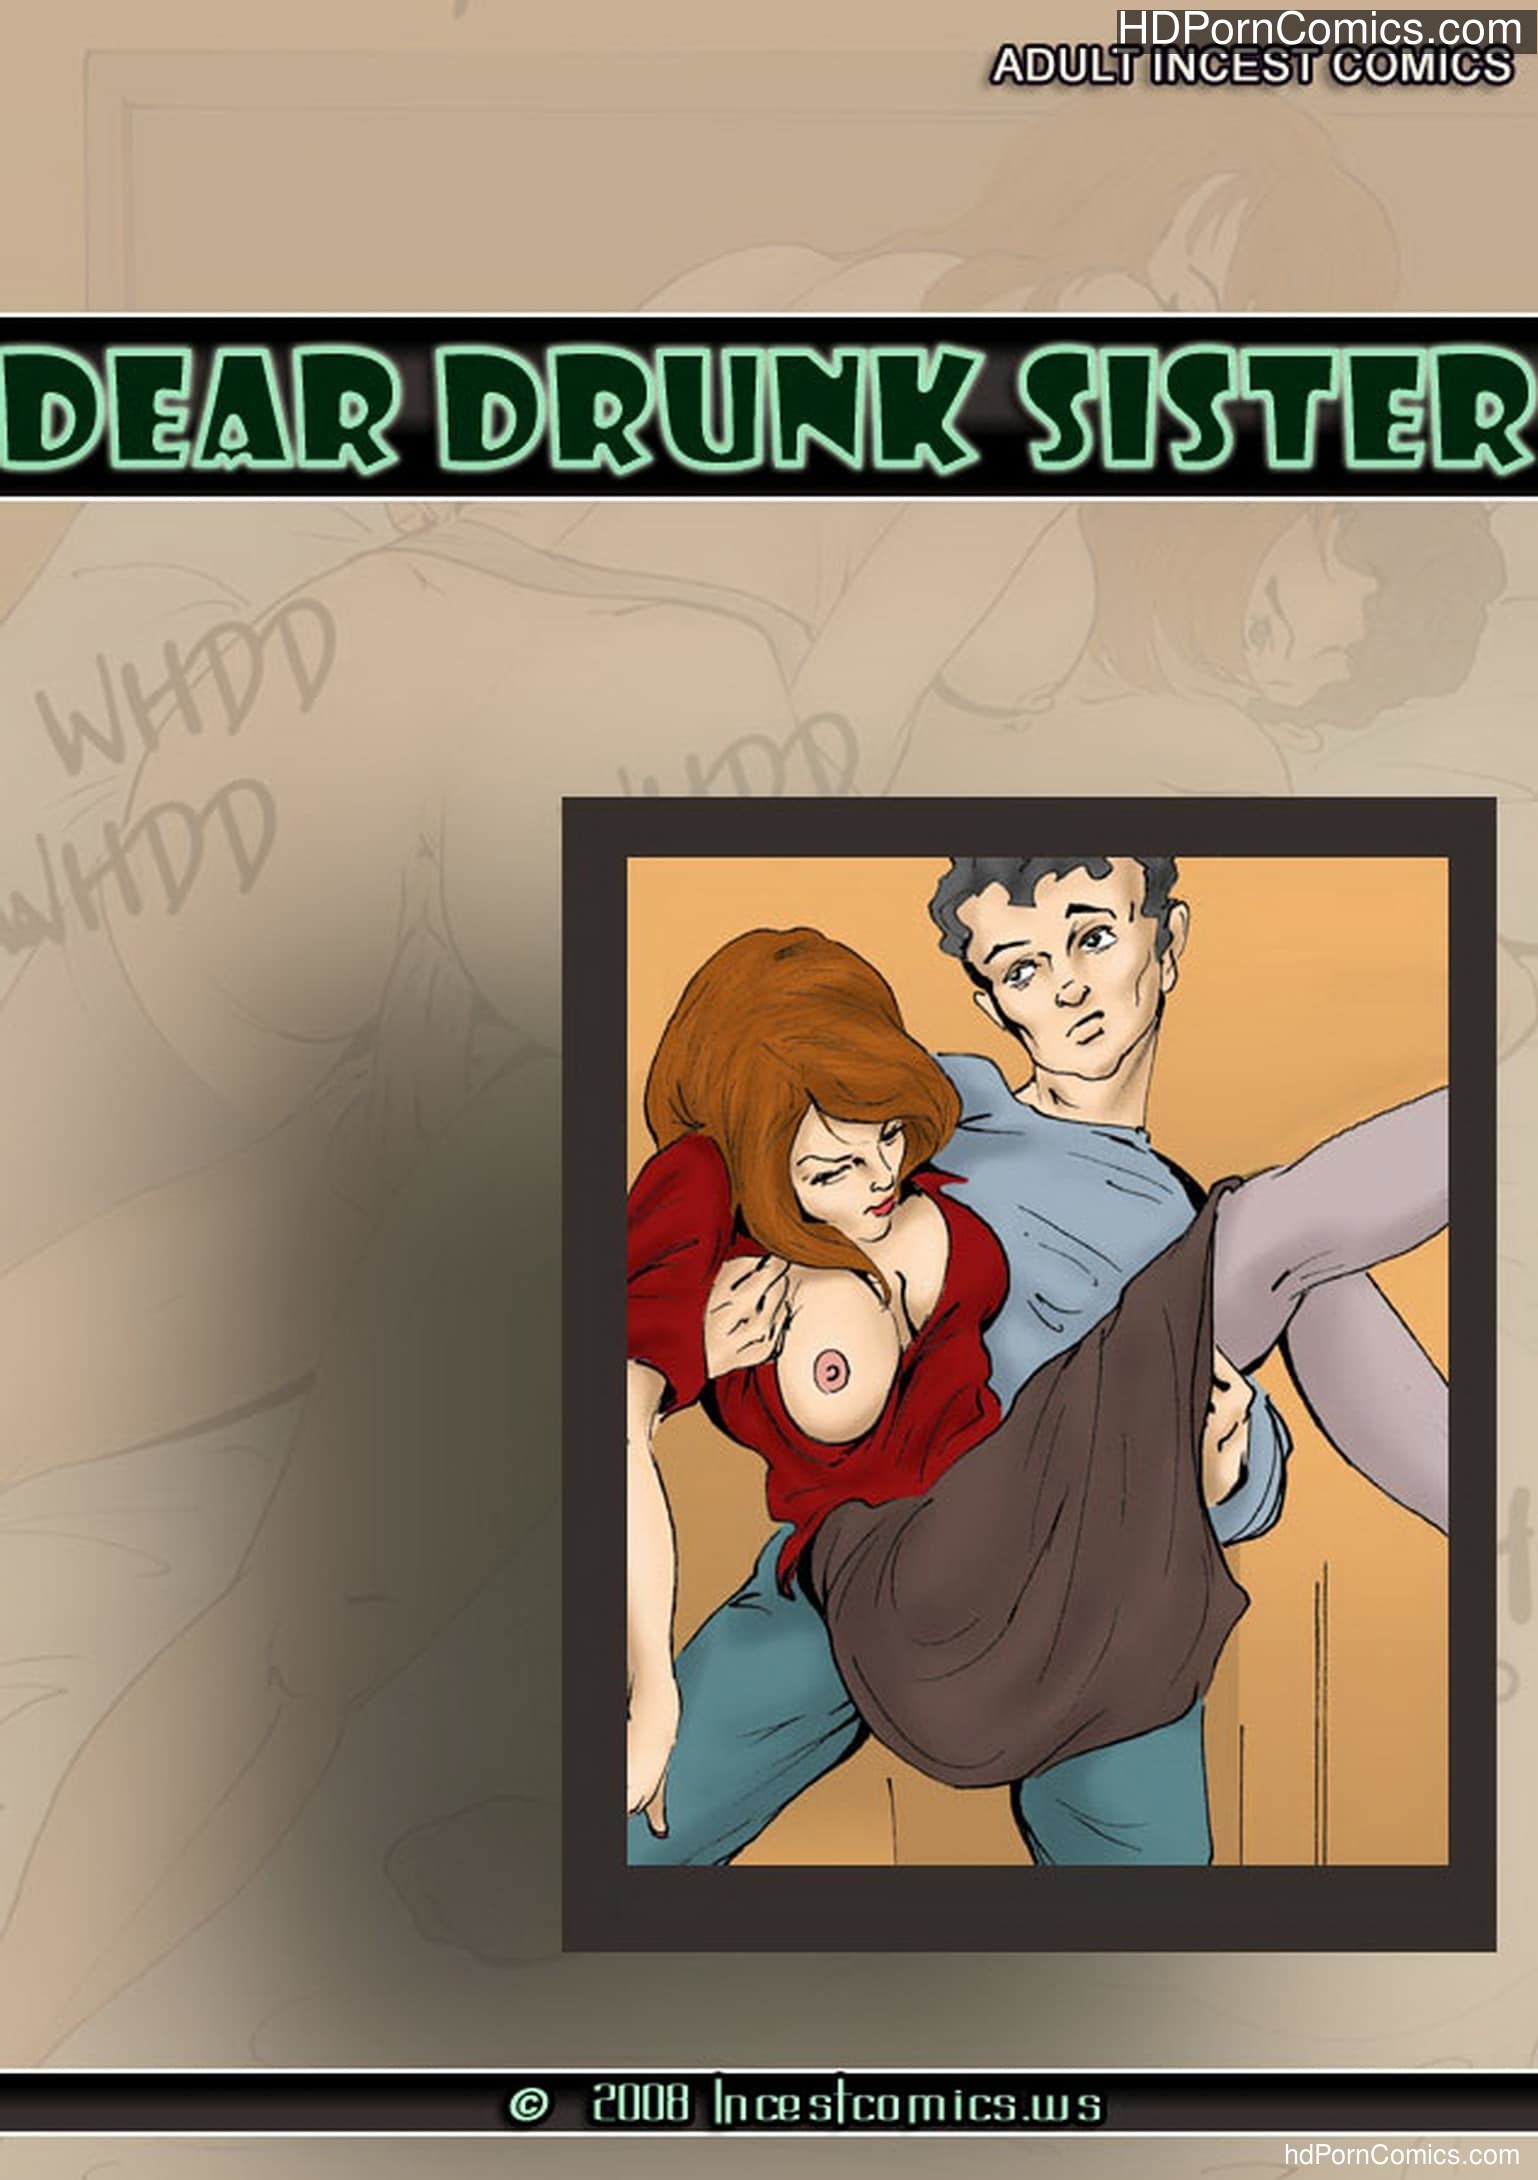 Dear Drunk Sister Free Cartoon Porn Comic Hd Porn Comics